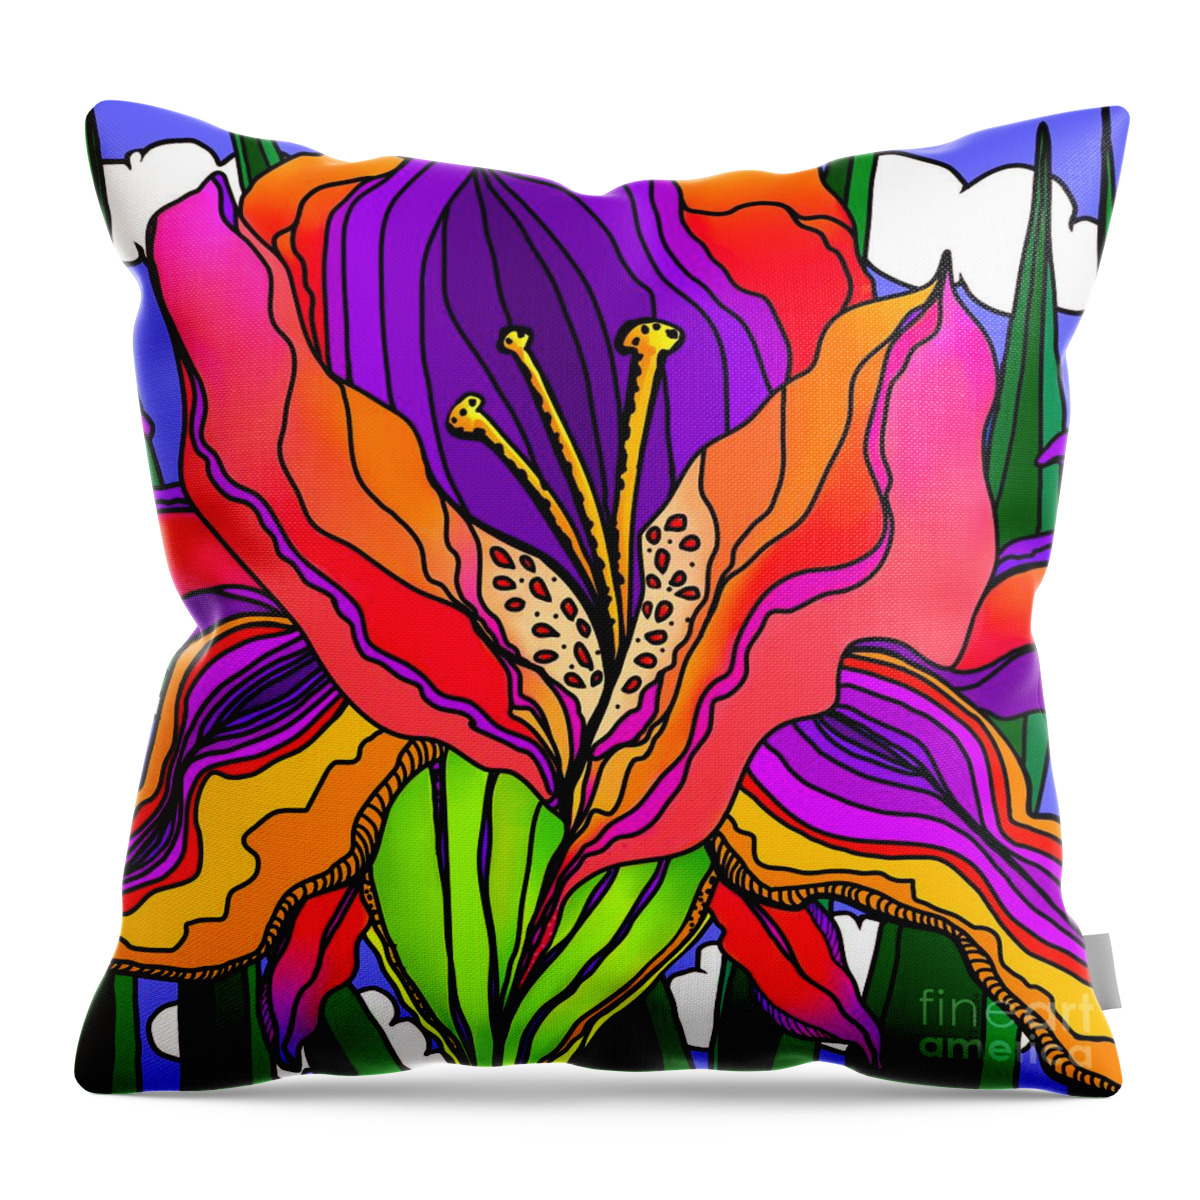 Floral Throw Pillow featuring the digital art Magical Mystery Garden by Mary Eichert